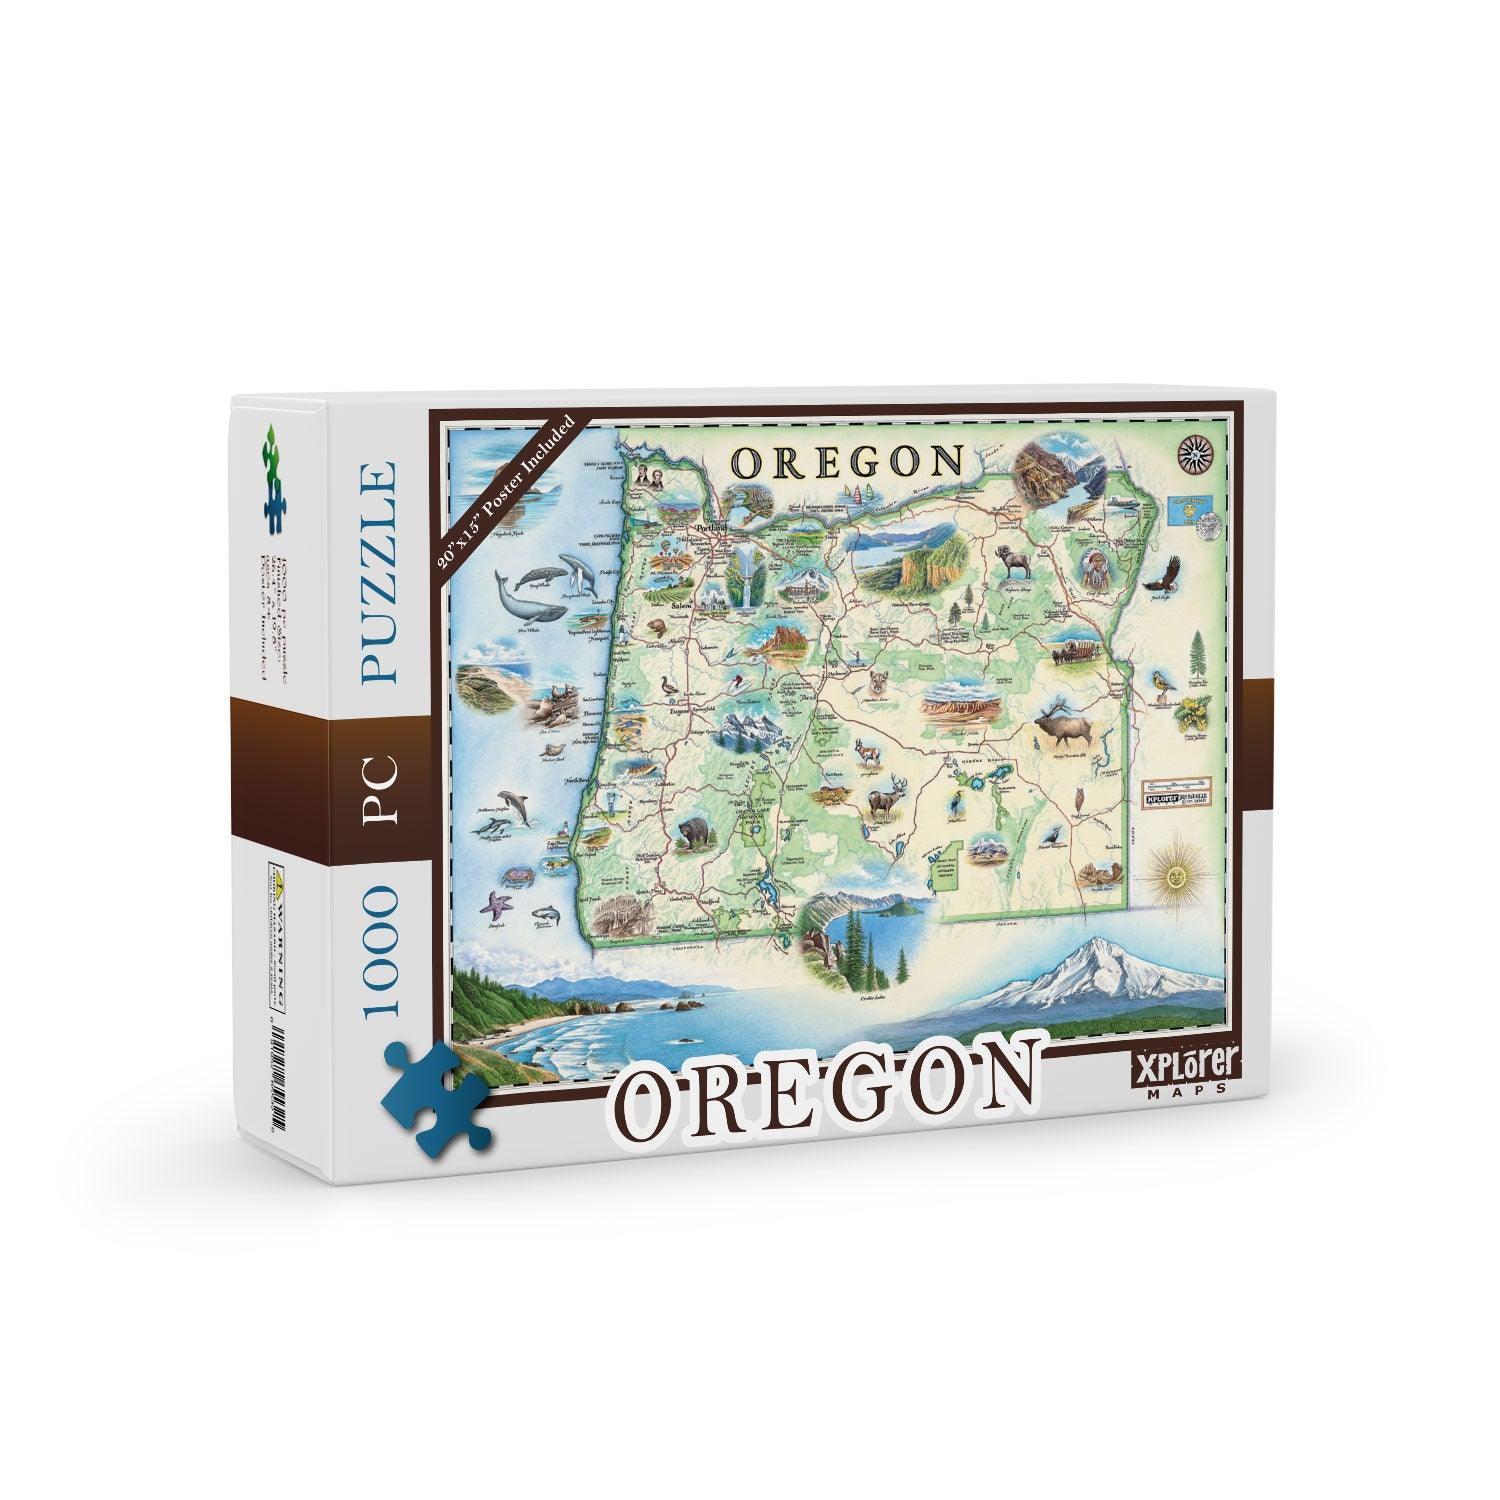 Oregon State Map Jigsaw Puzzle - Xplorer Maps